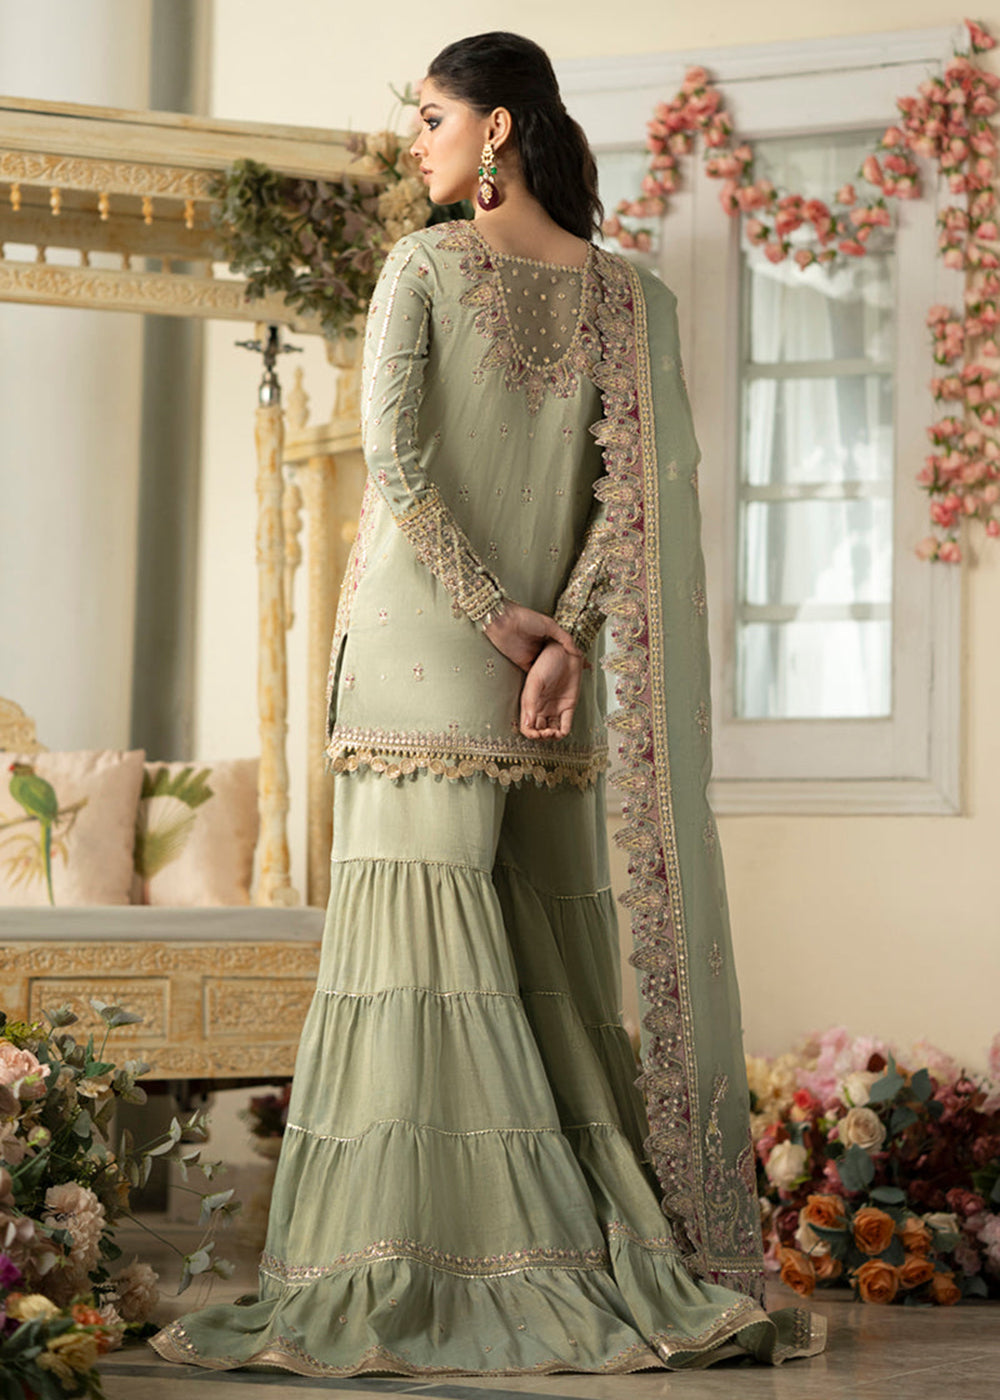 Buy Now Dilnaaz Wedding Formals 2023 by Qalamkar | DN-06 - FARIZA Online in USA, UK, Canada & Worldwide at Empress Clothing. 